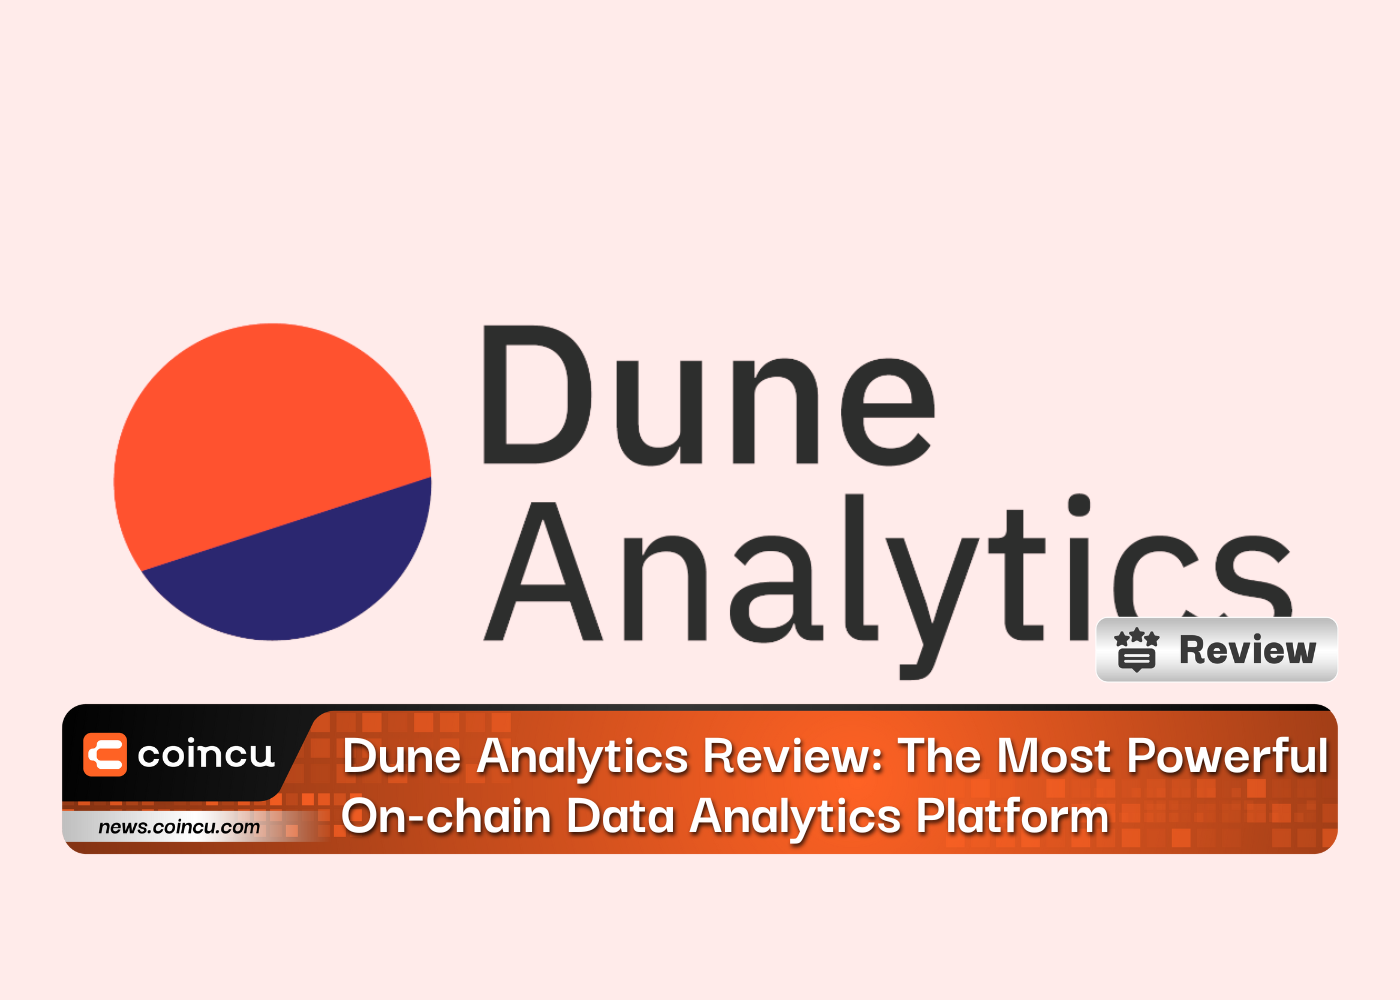 Dune Analytics Review: The Most Powerful On-chain Data Analytics Platform